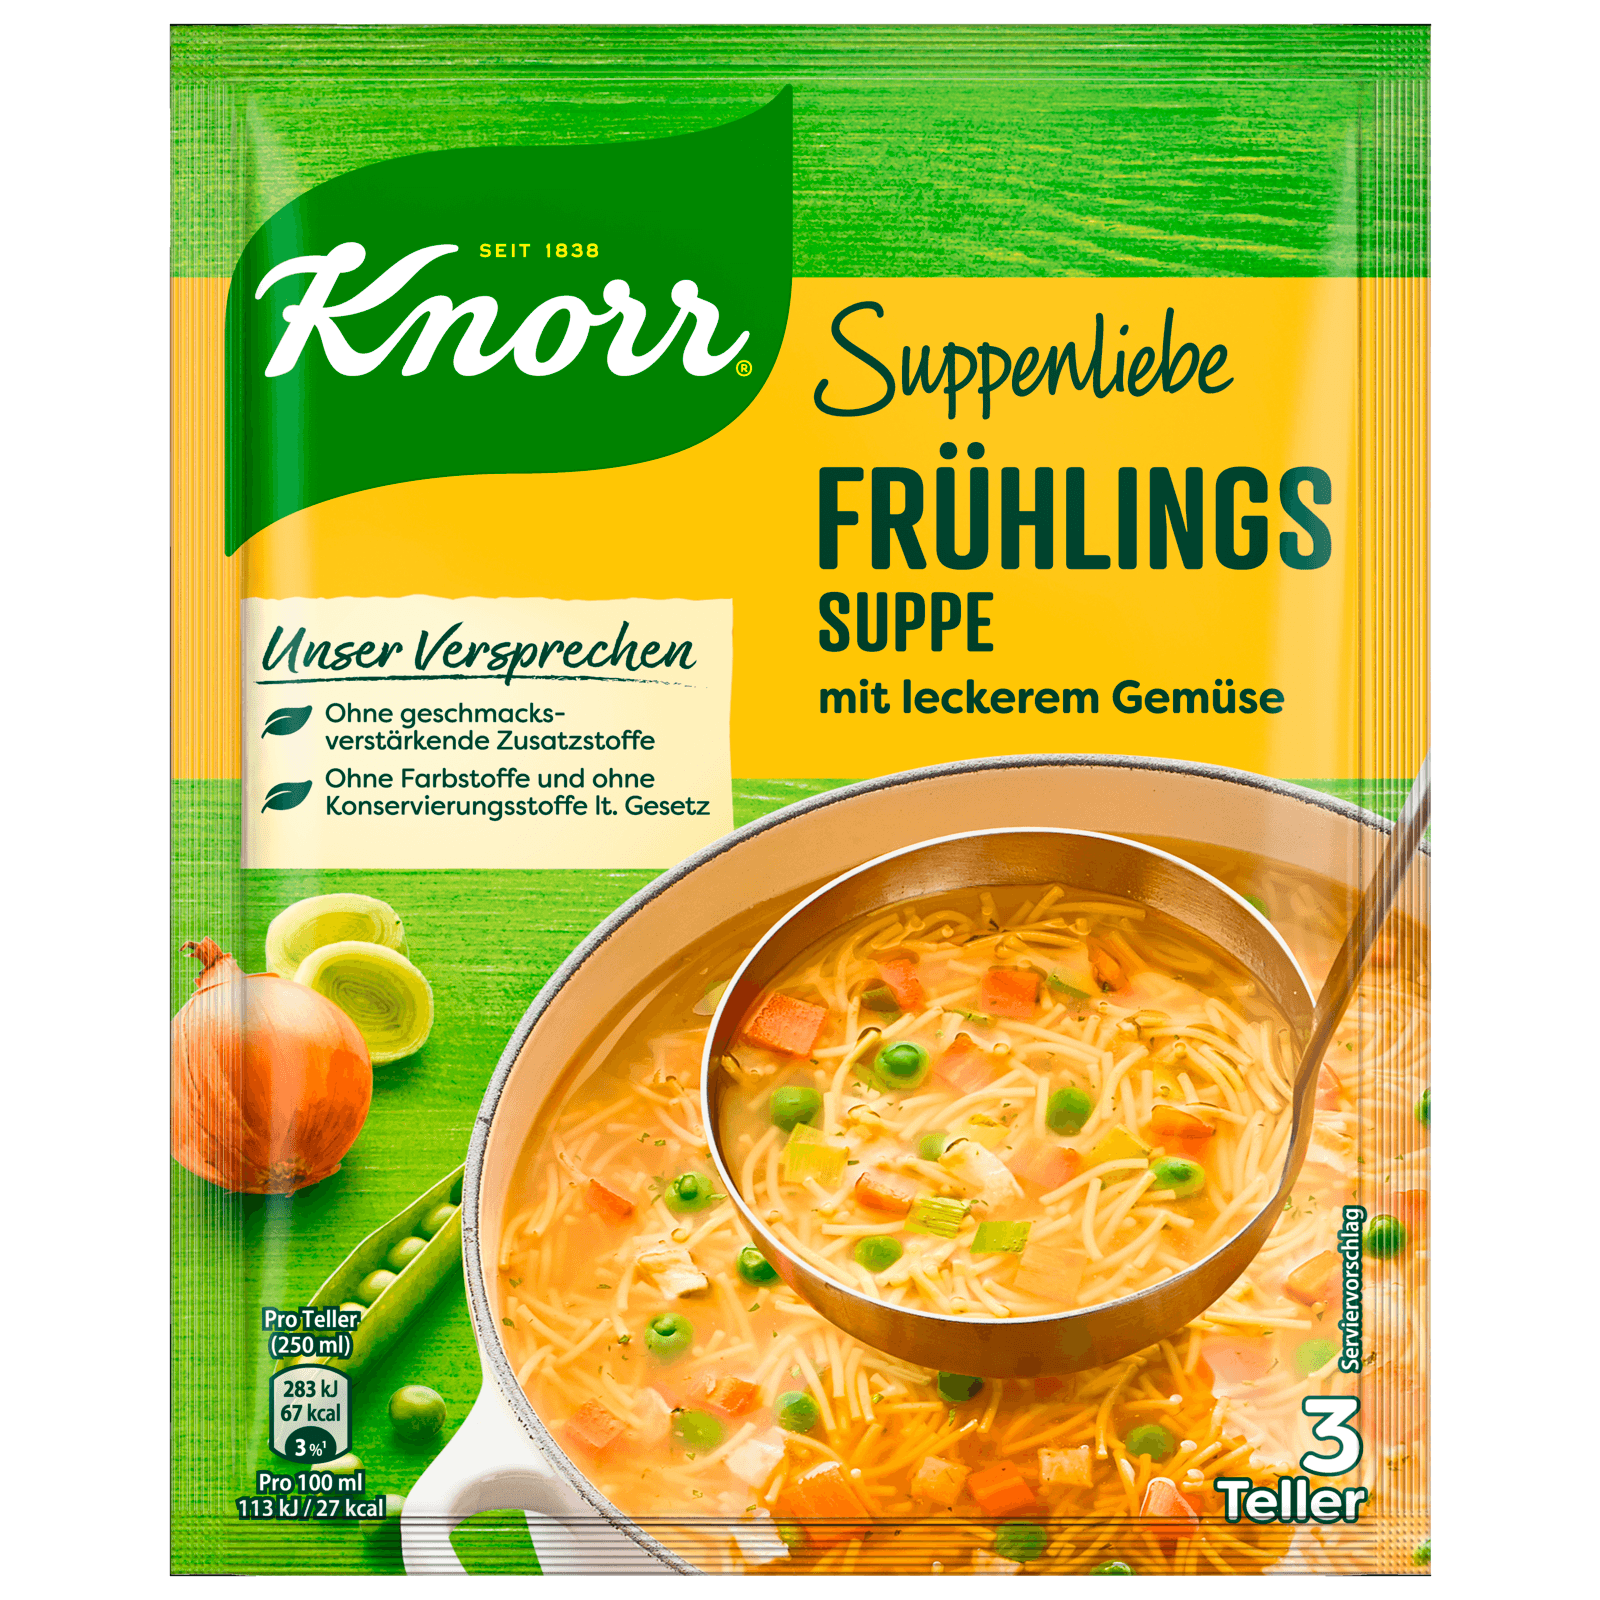 Knorr Suppenliebe Frühlings Suppe 3 Teller bei REWE online bestellen!